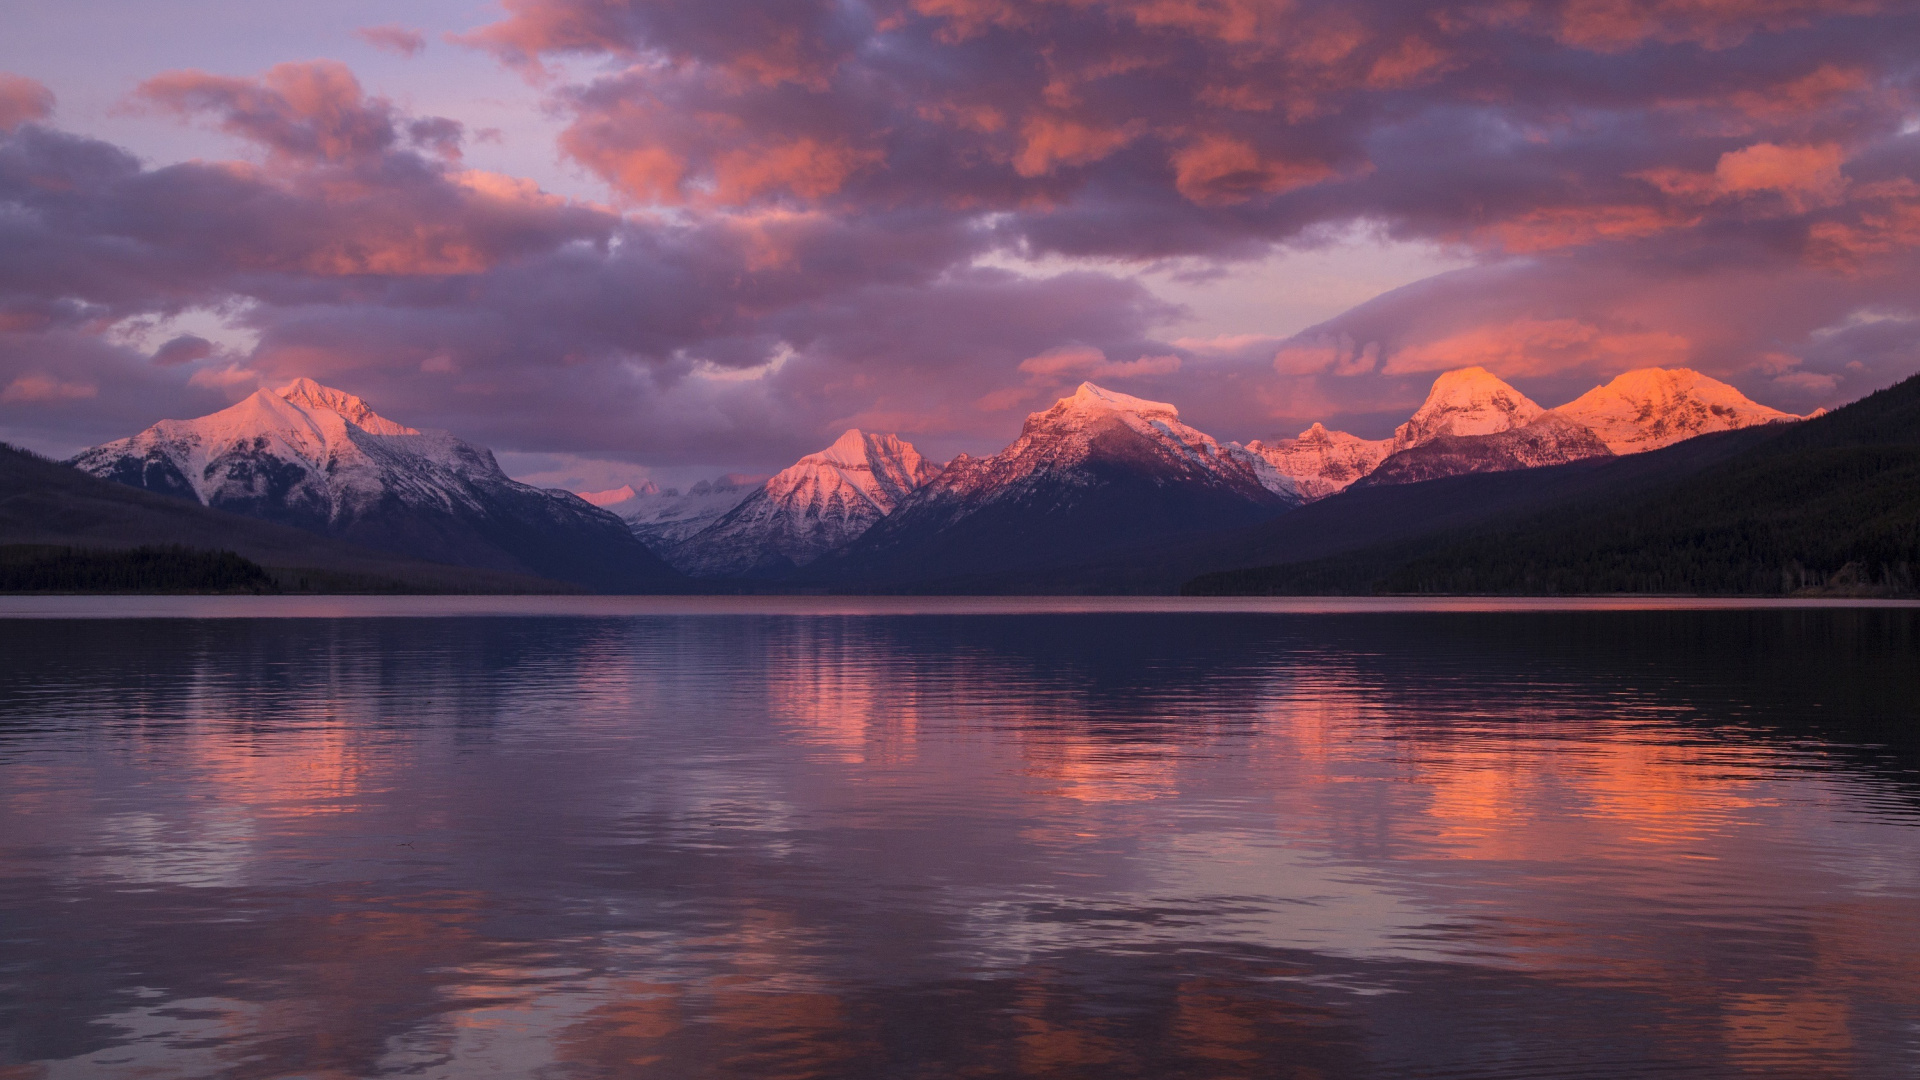 Download Mountains, sunset, Lake McDonald wallpaper, 1920x Full HD, HDTV, FHD, 1080p